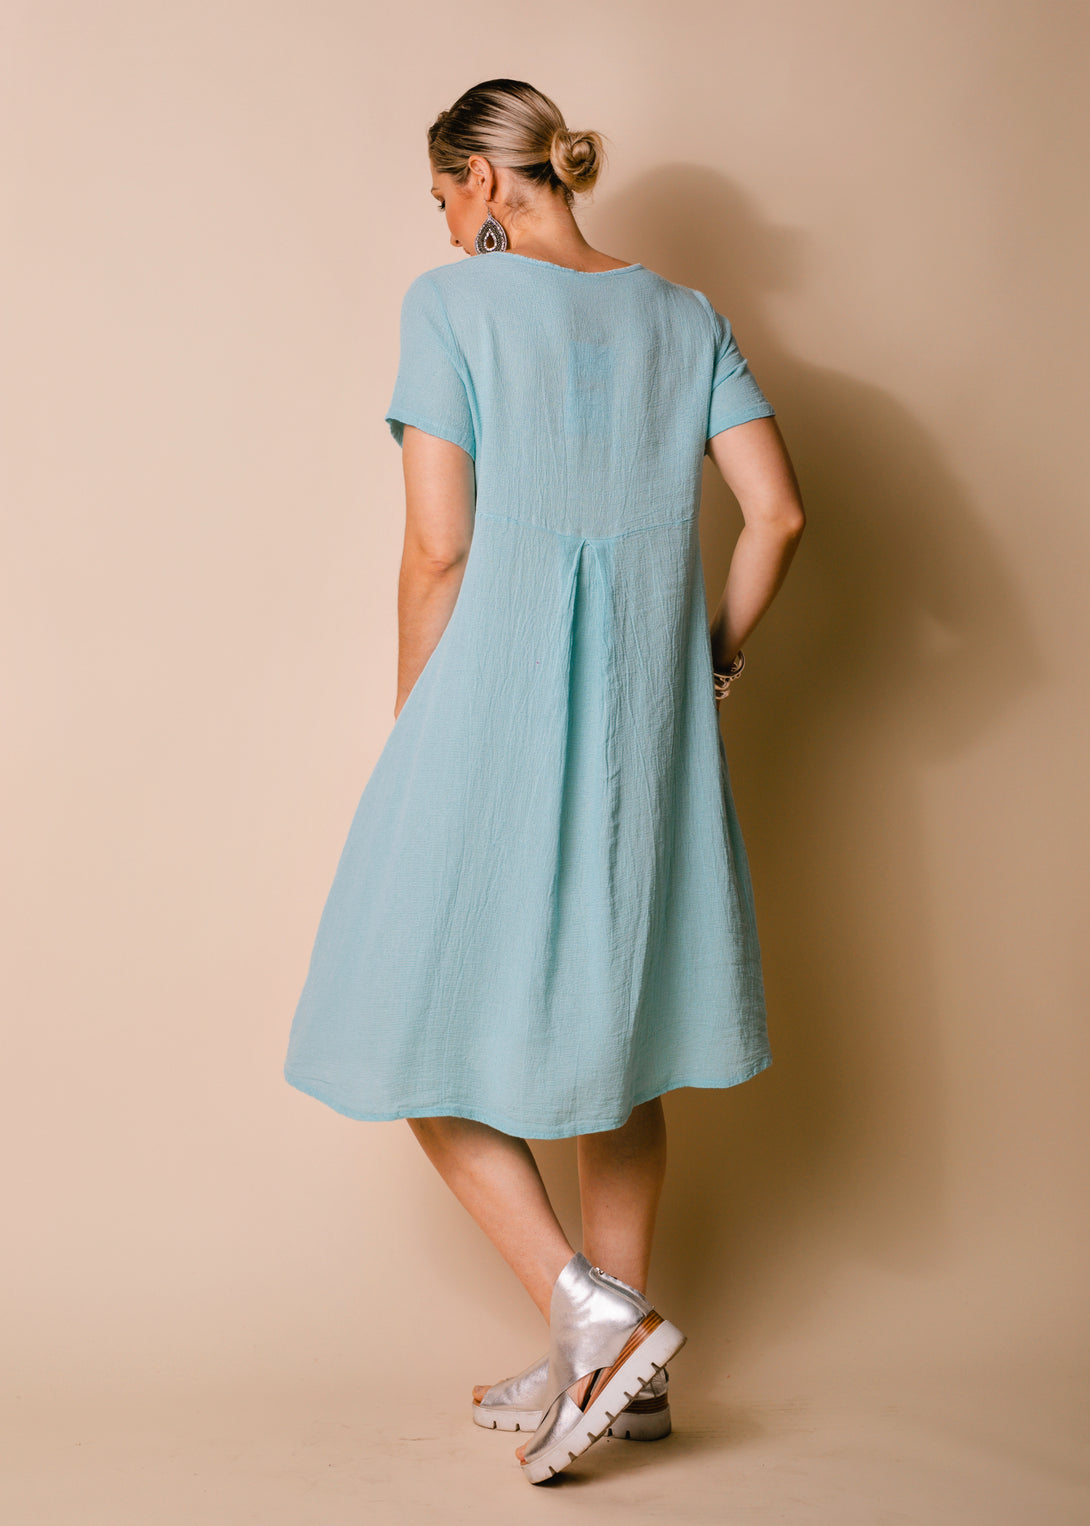 Britan Linen Blend Dress in Aqua Mist - Imagine Fashion